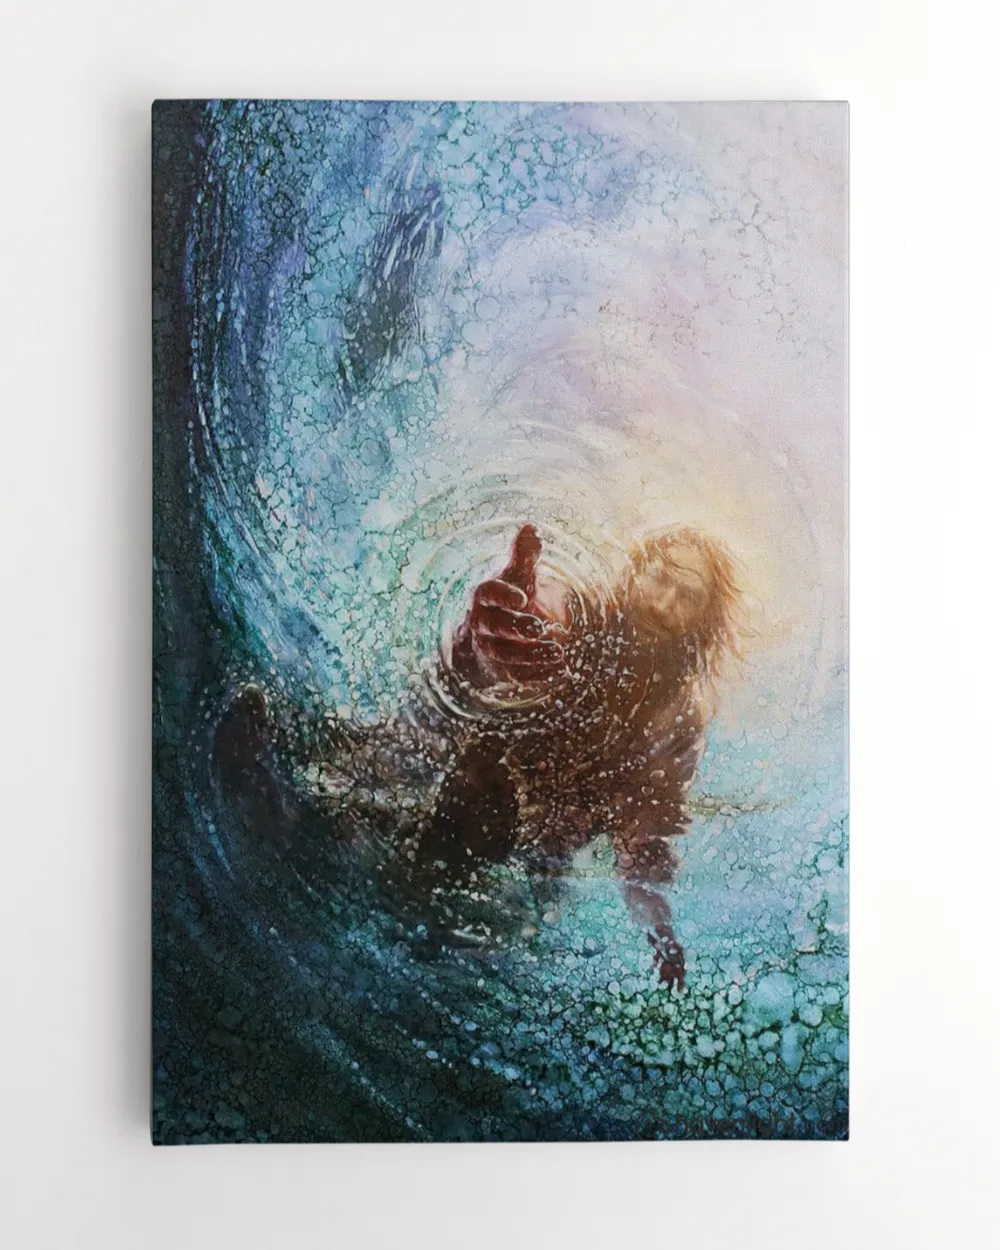 Jesus Christ Wall Art Hand of Gods Reaching Into Water